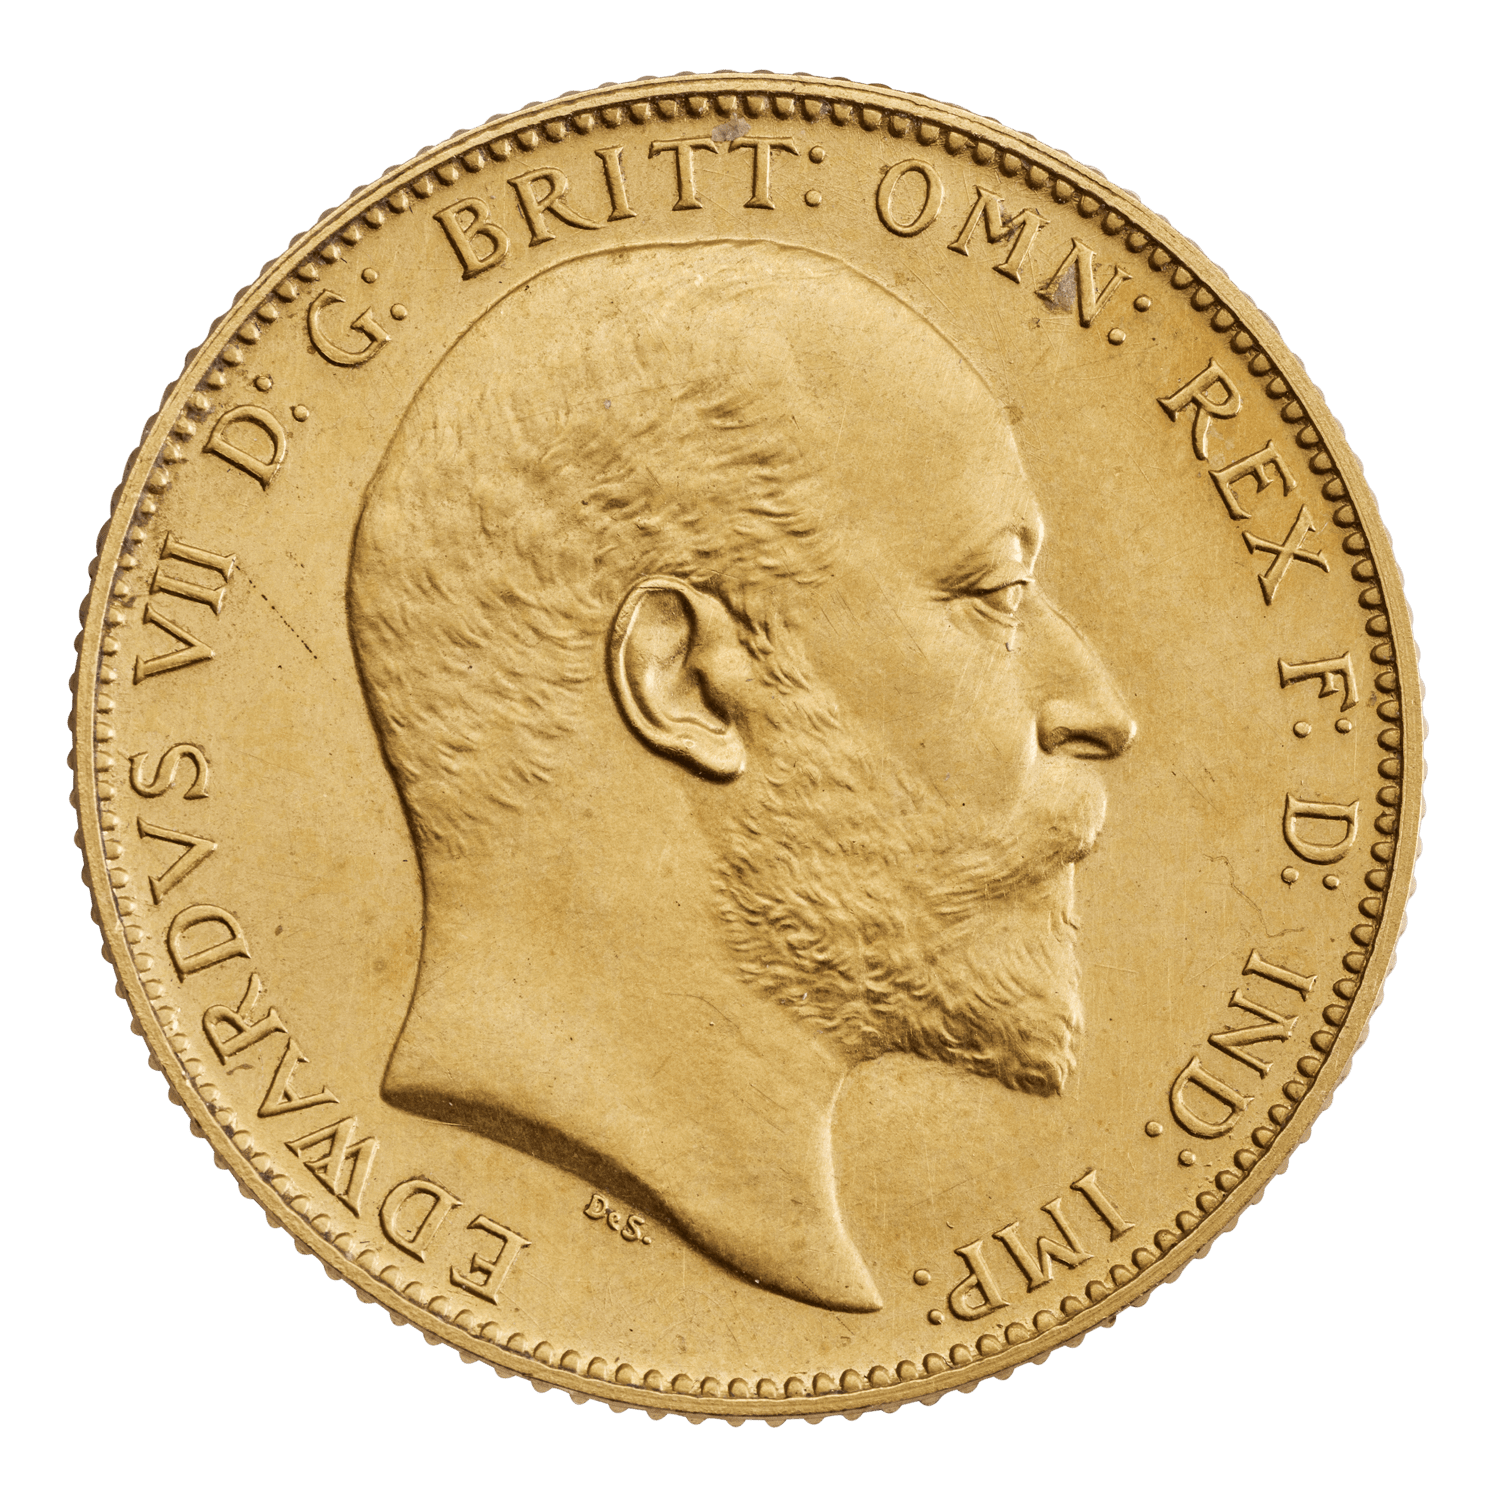 The Sovereign Best Value King Edward VII Gold Bullion Coin